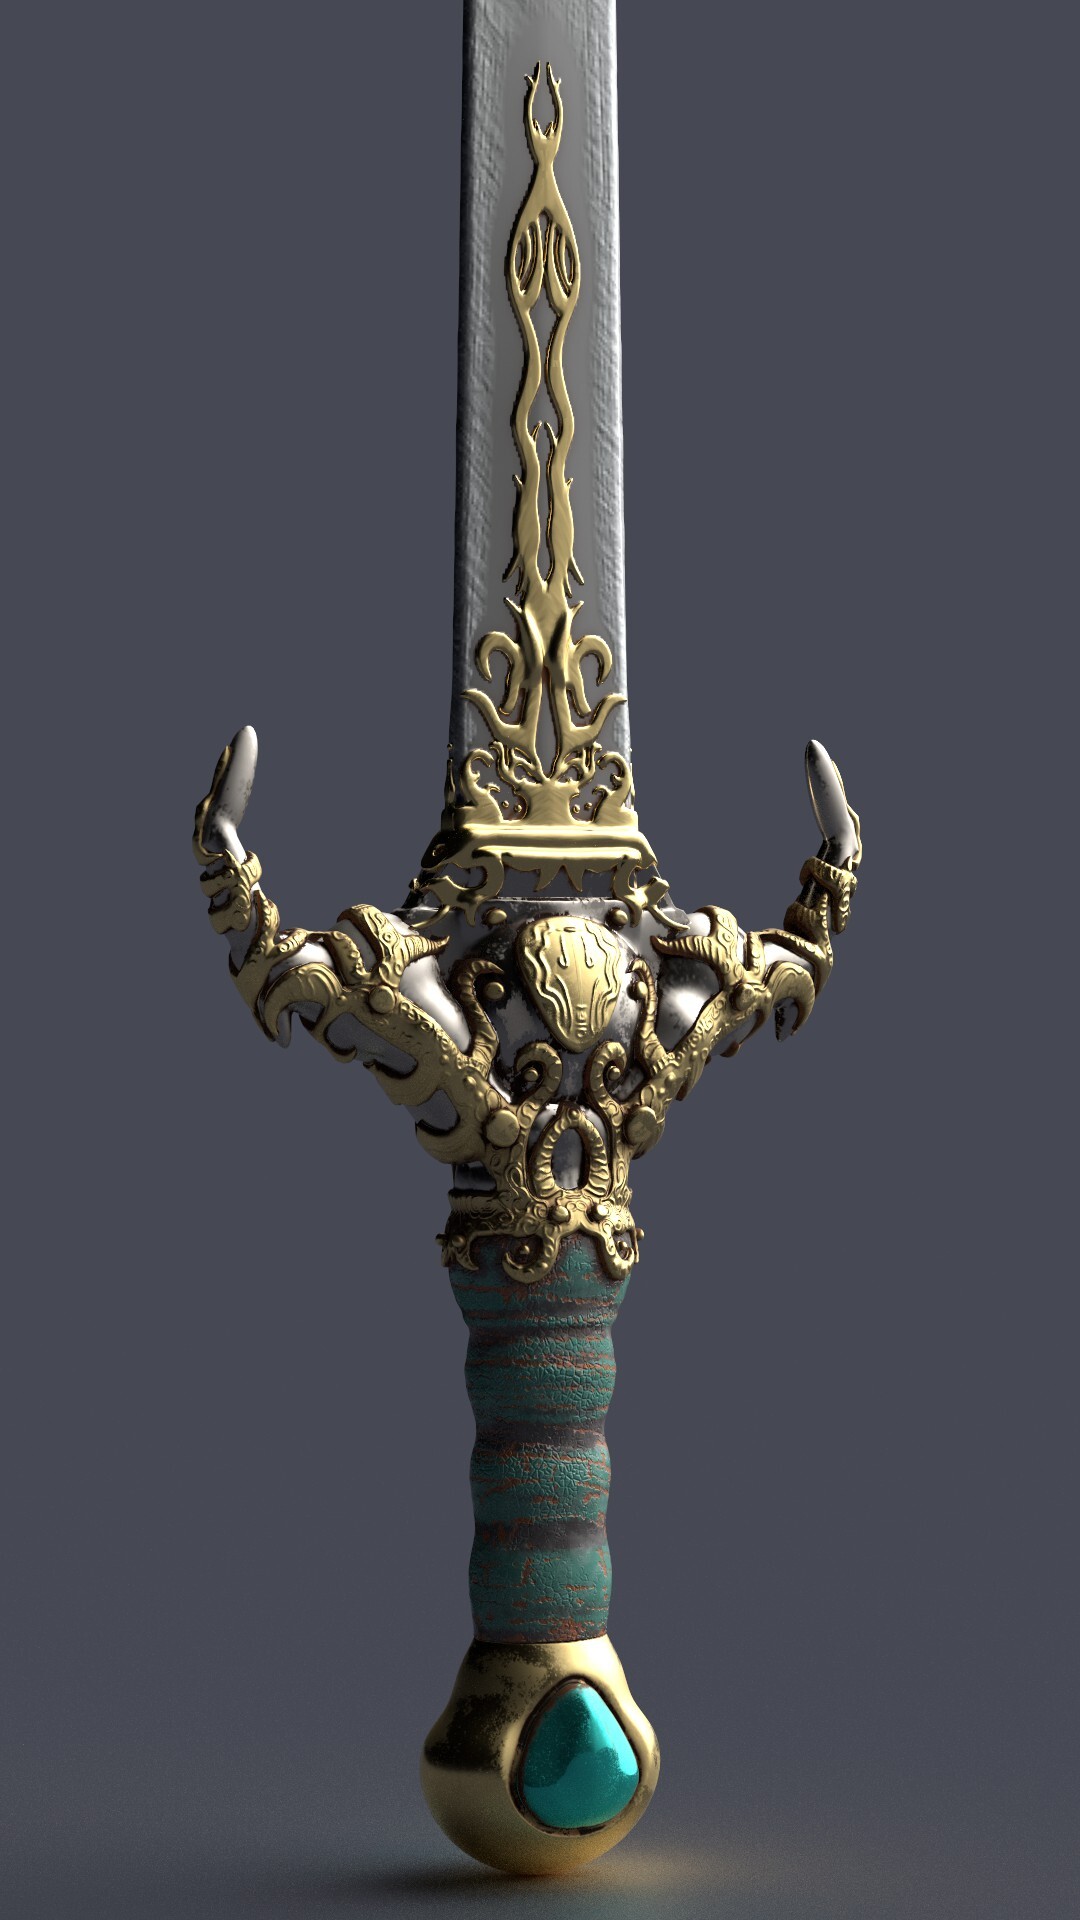 ArtStation - medieval fantasy weapon for ue5